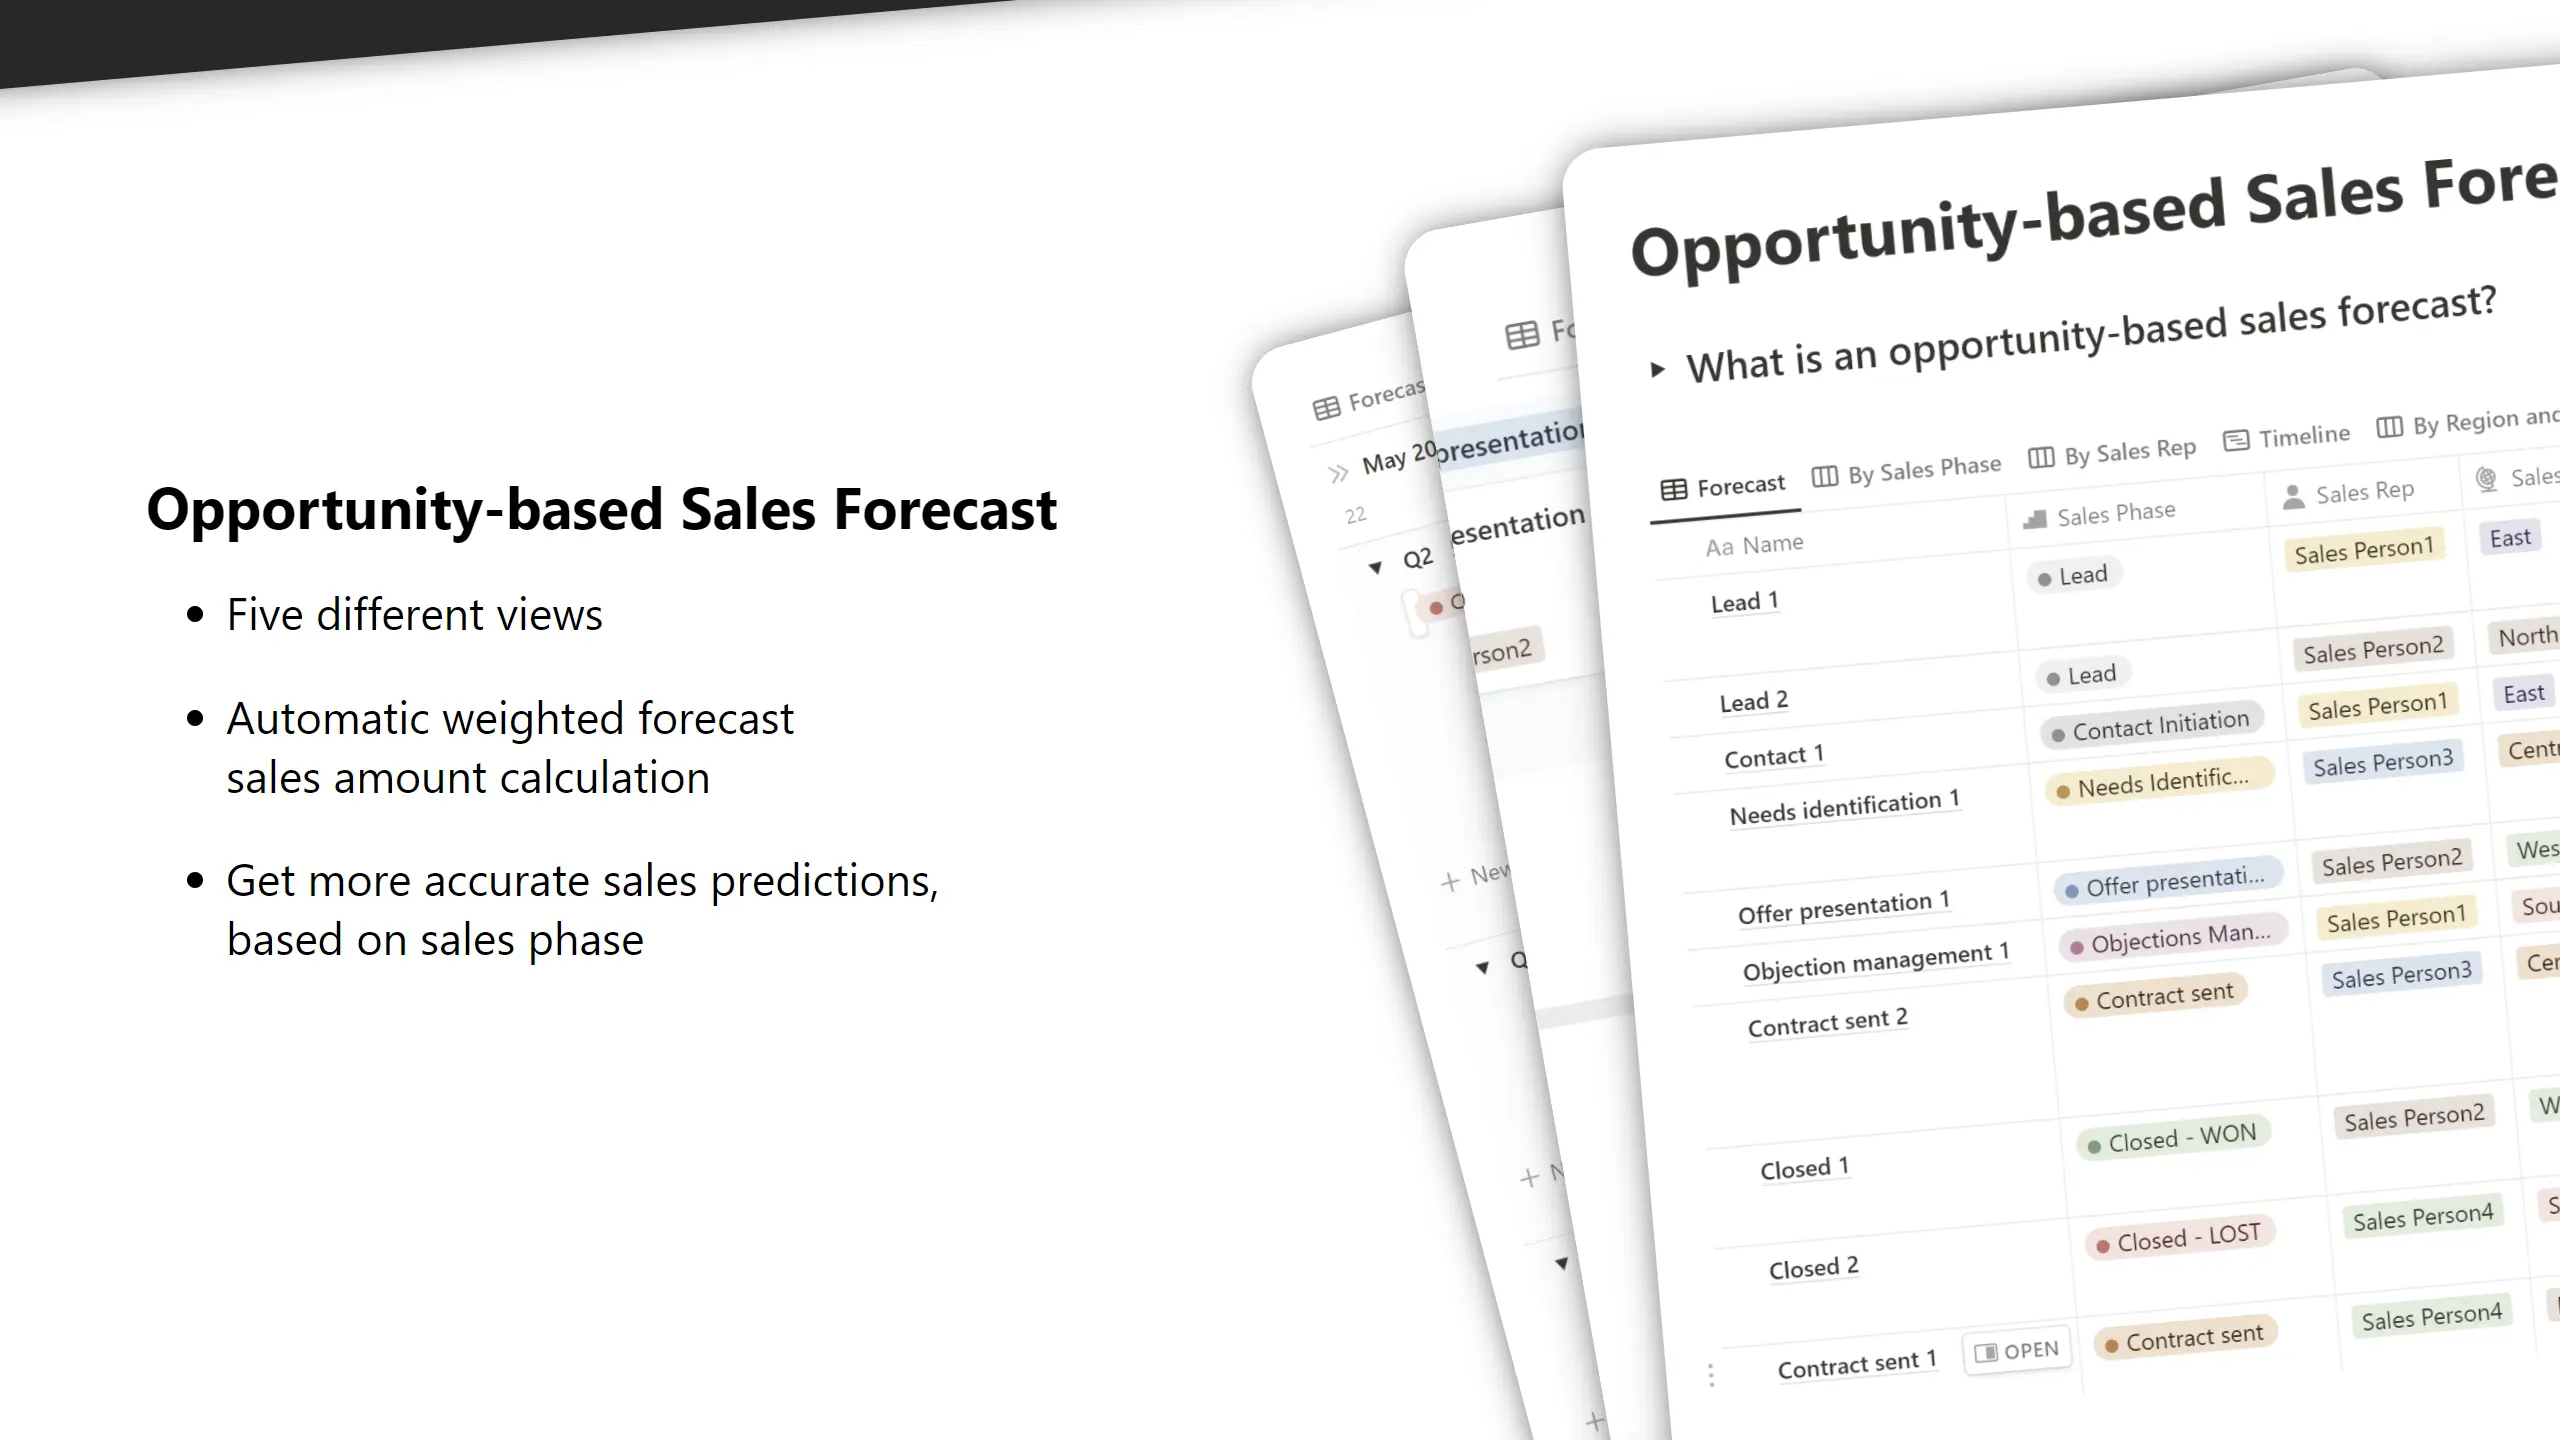 Opportunity Based Sales Forecast image